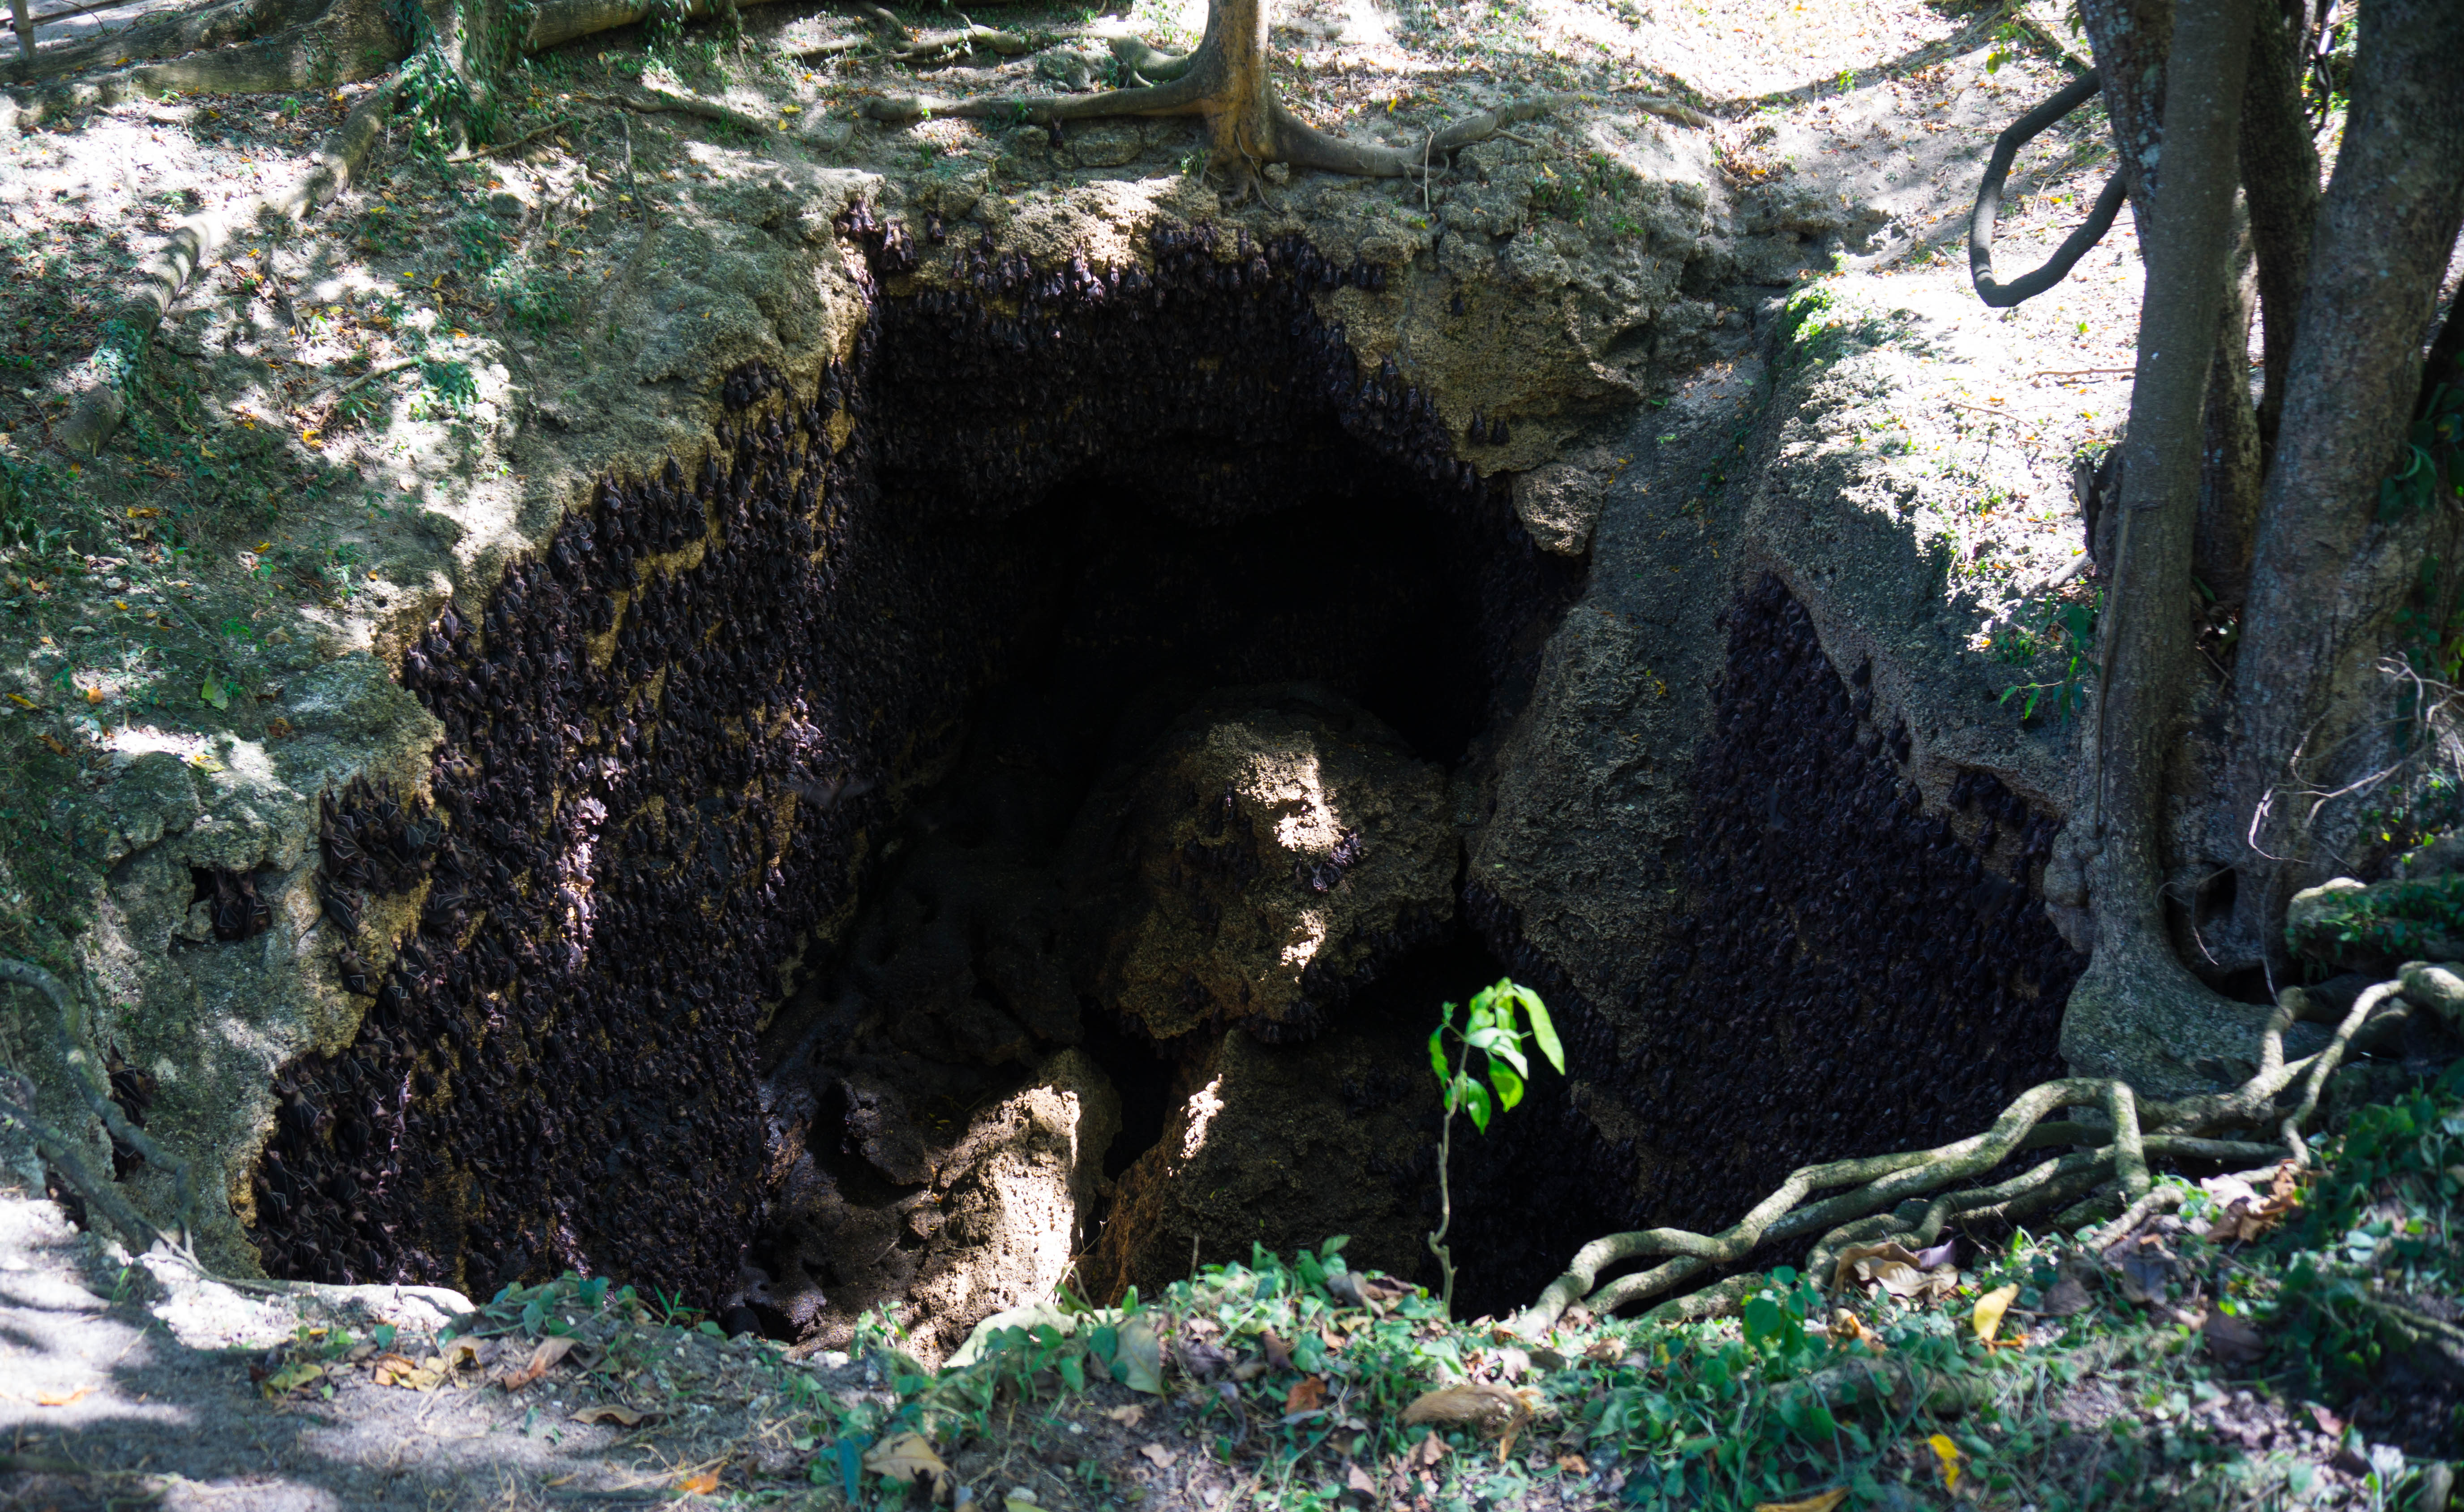 Bat cave at Monfort Bat Sanctuary